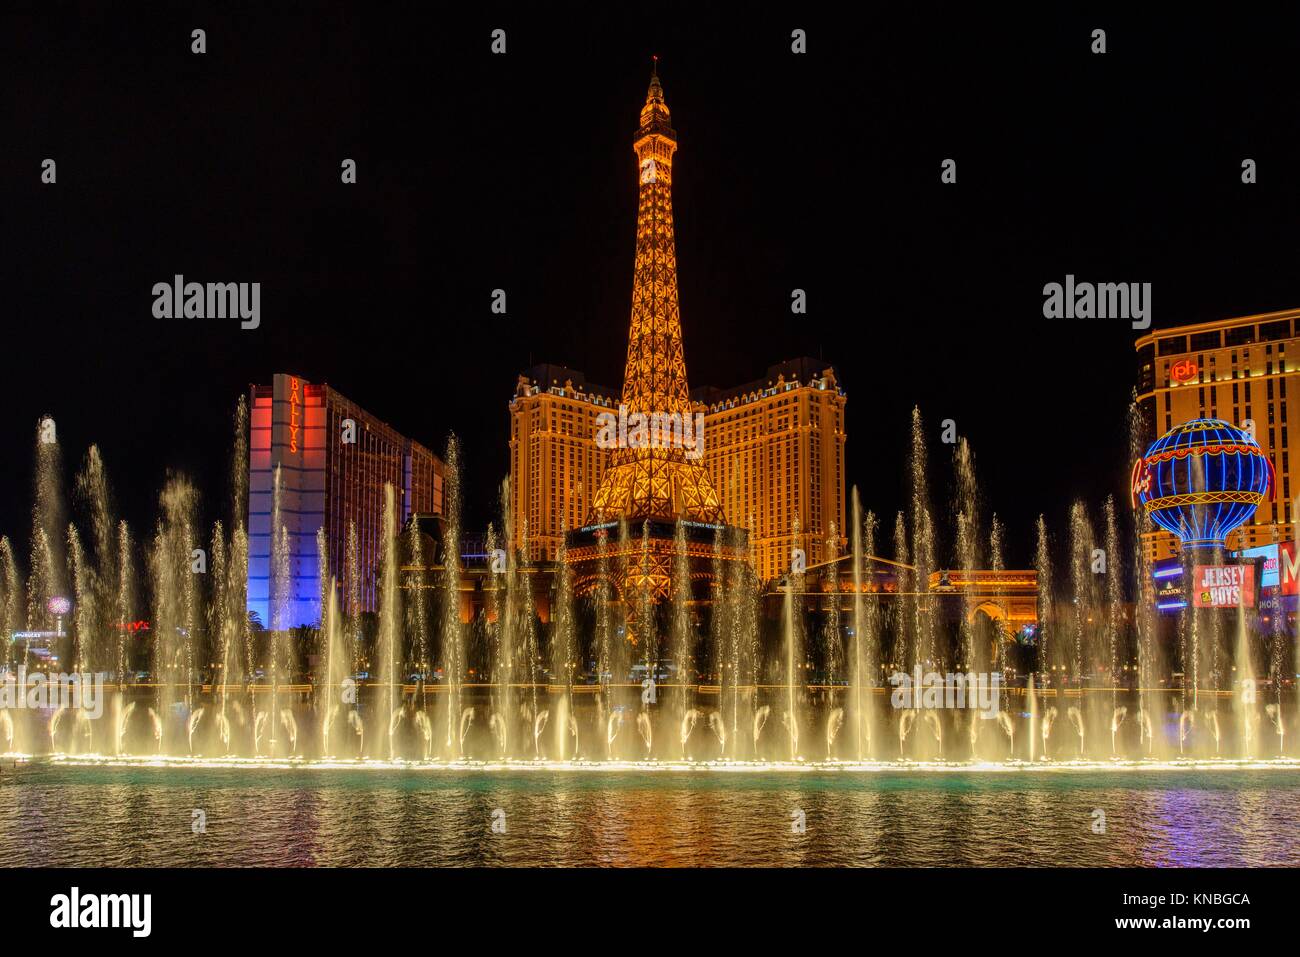 Fountains of Bellagio with Paris Hotel, Eiffel Tower replica, Las Vegas, Nevada, USA. Stock Photo